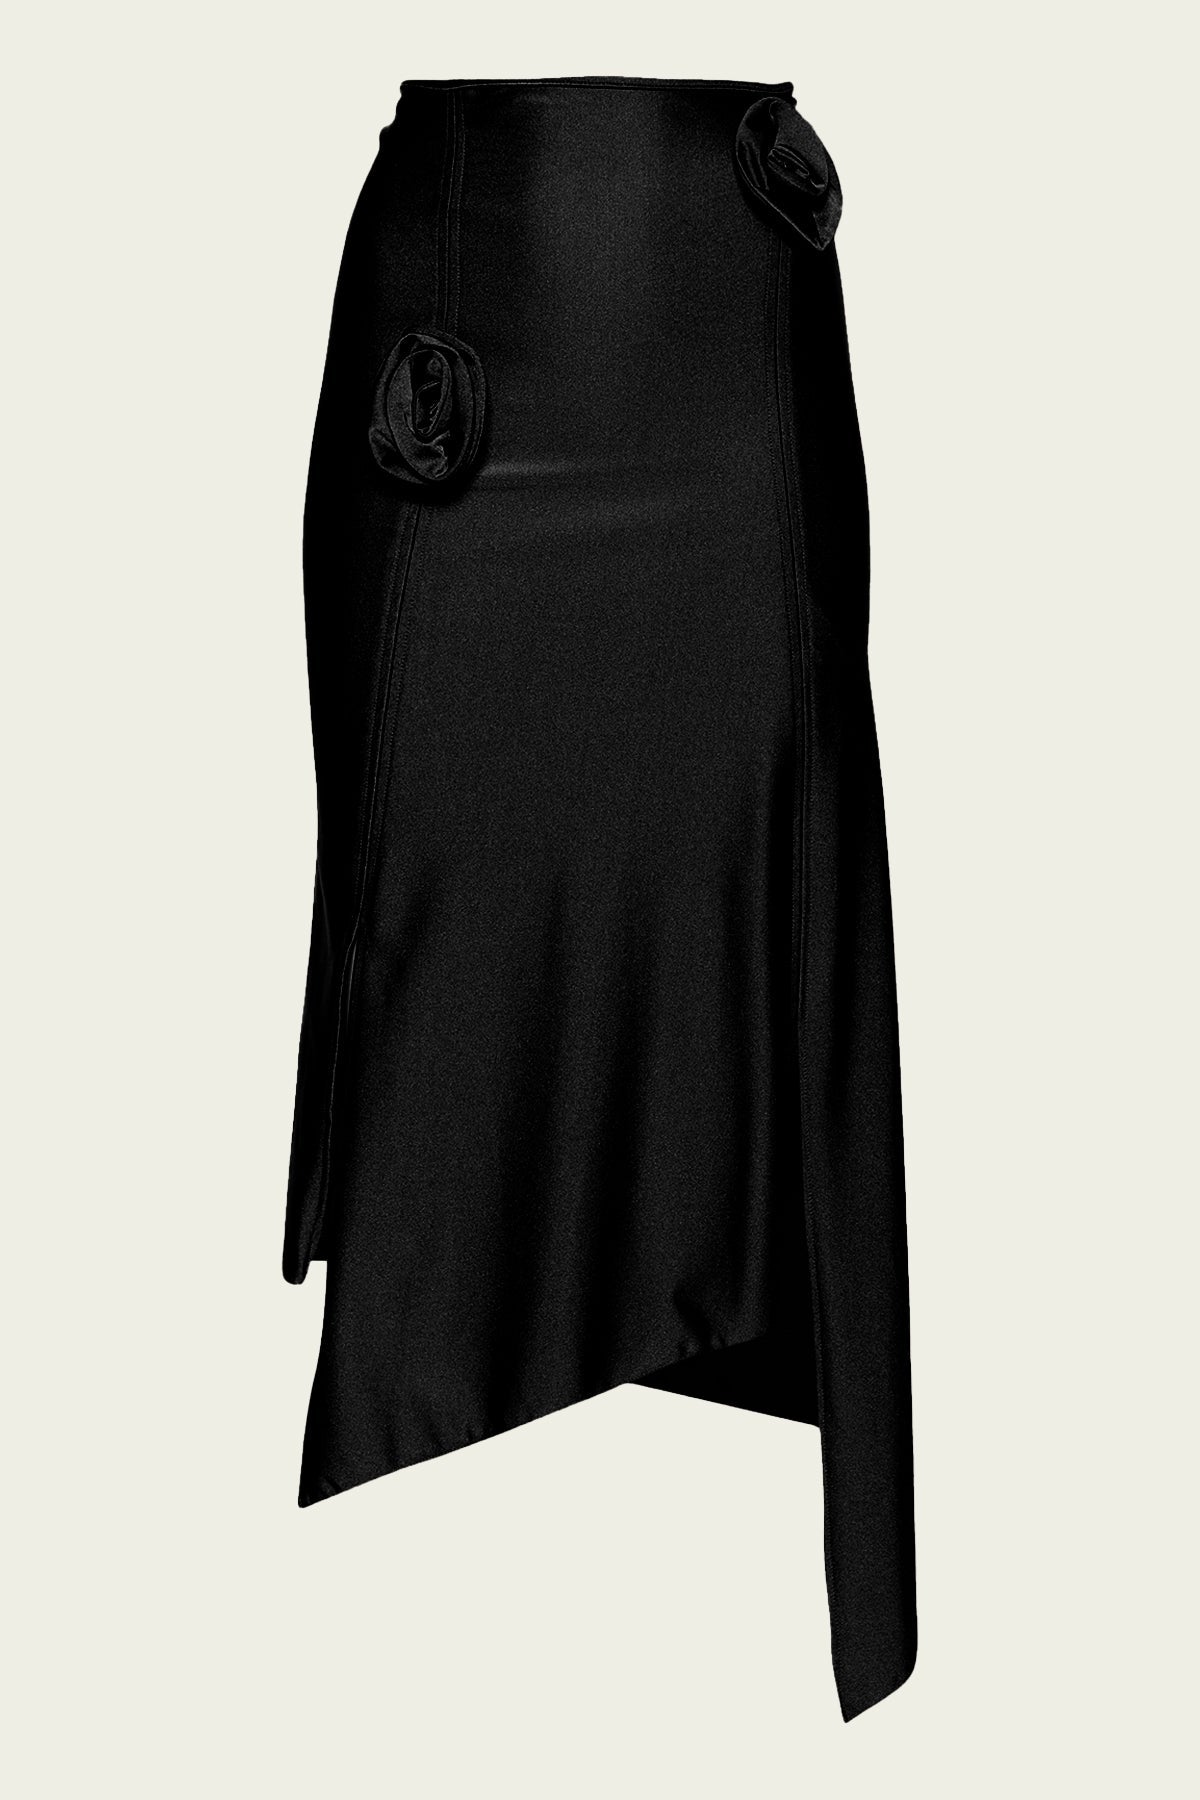 Flower Skirt in Black - shop-olivia.com